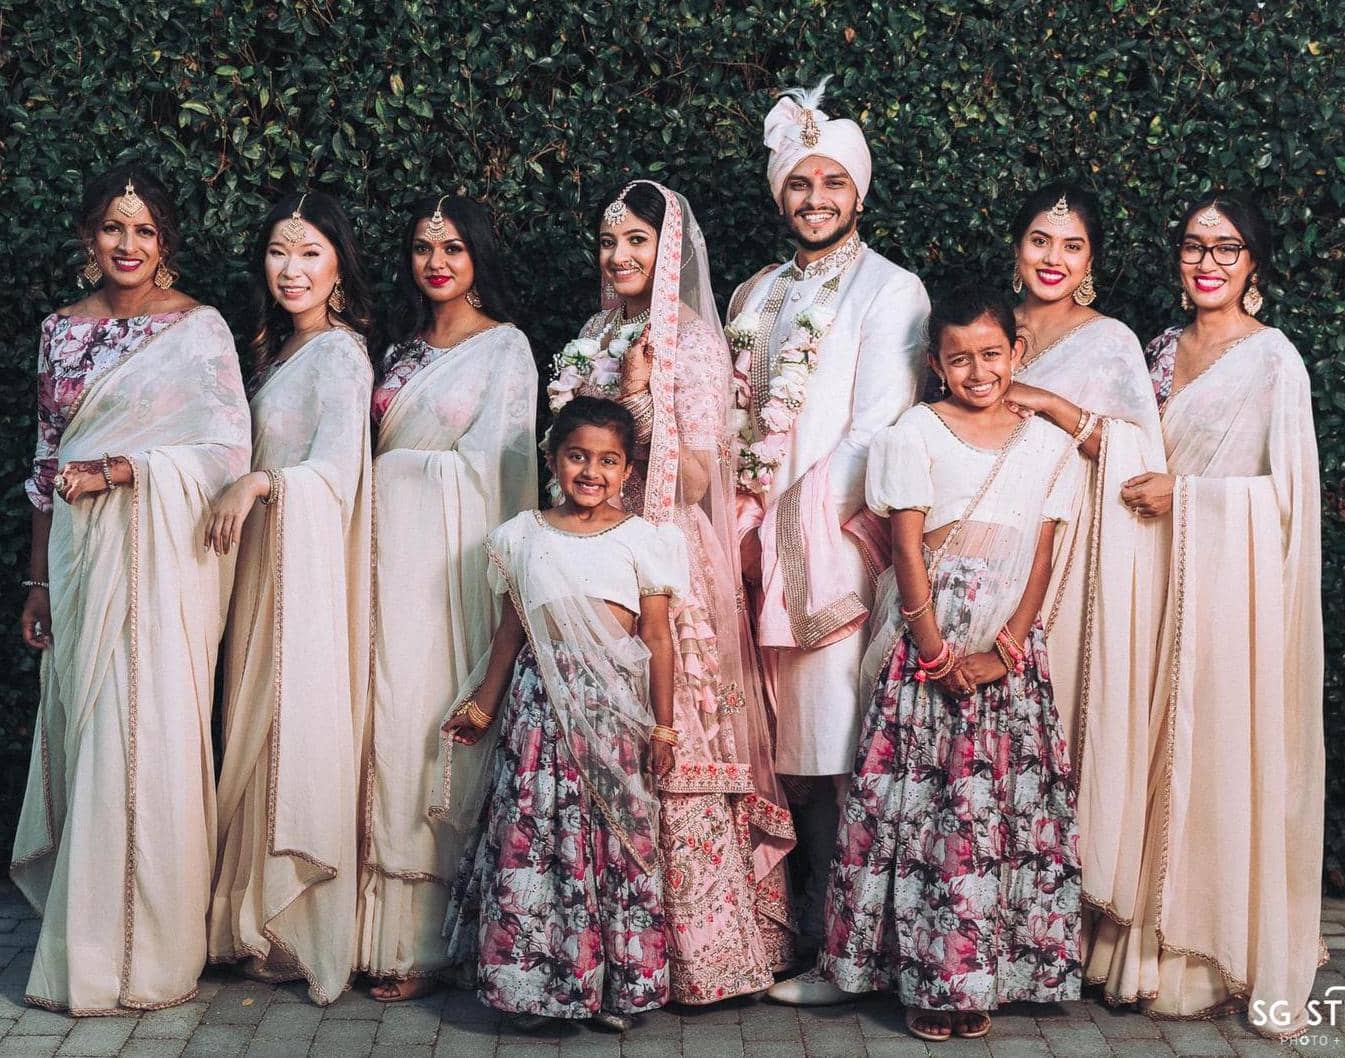 Details more than 75 saree dress code for wedding super hot